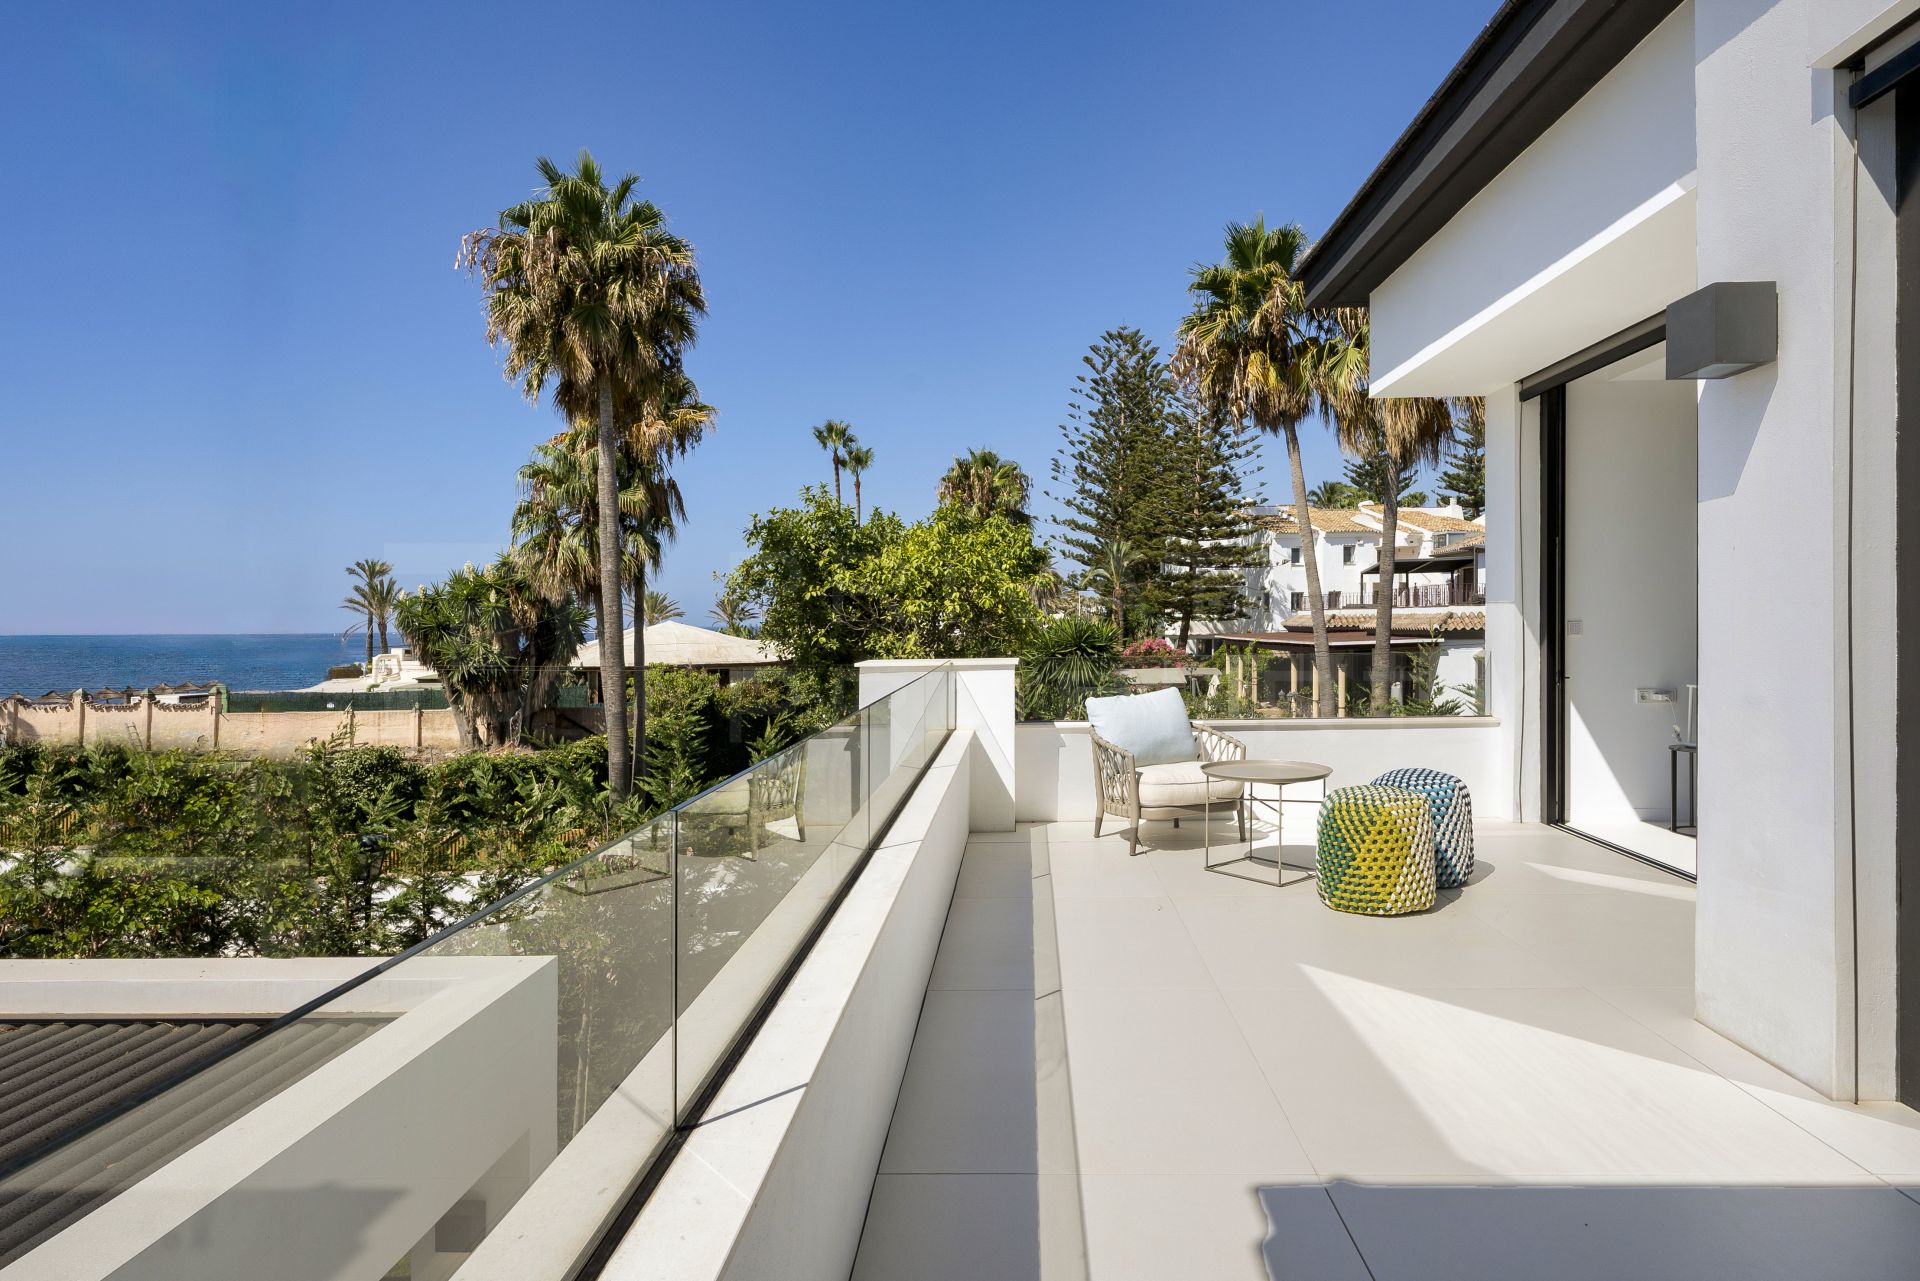 Brand new beachside villa in Cortijo Blanco